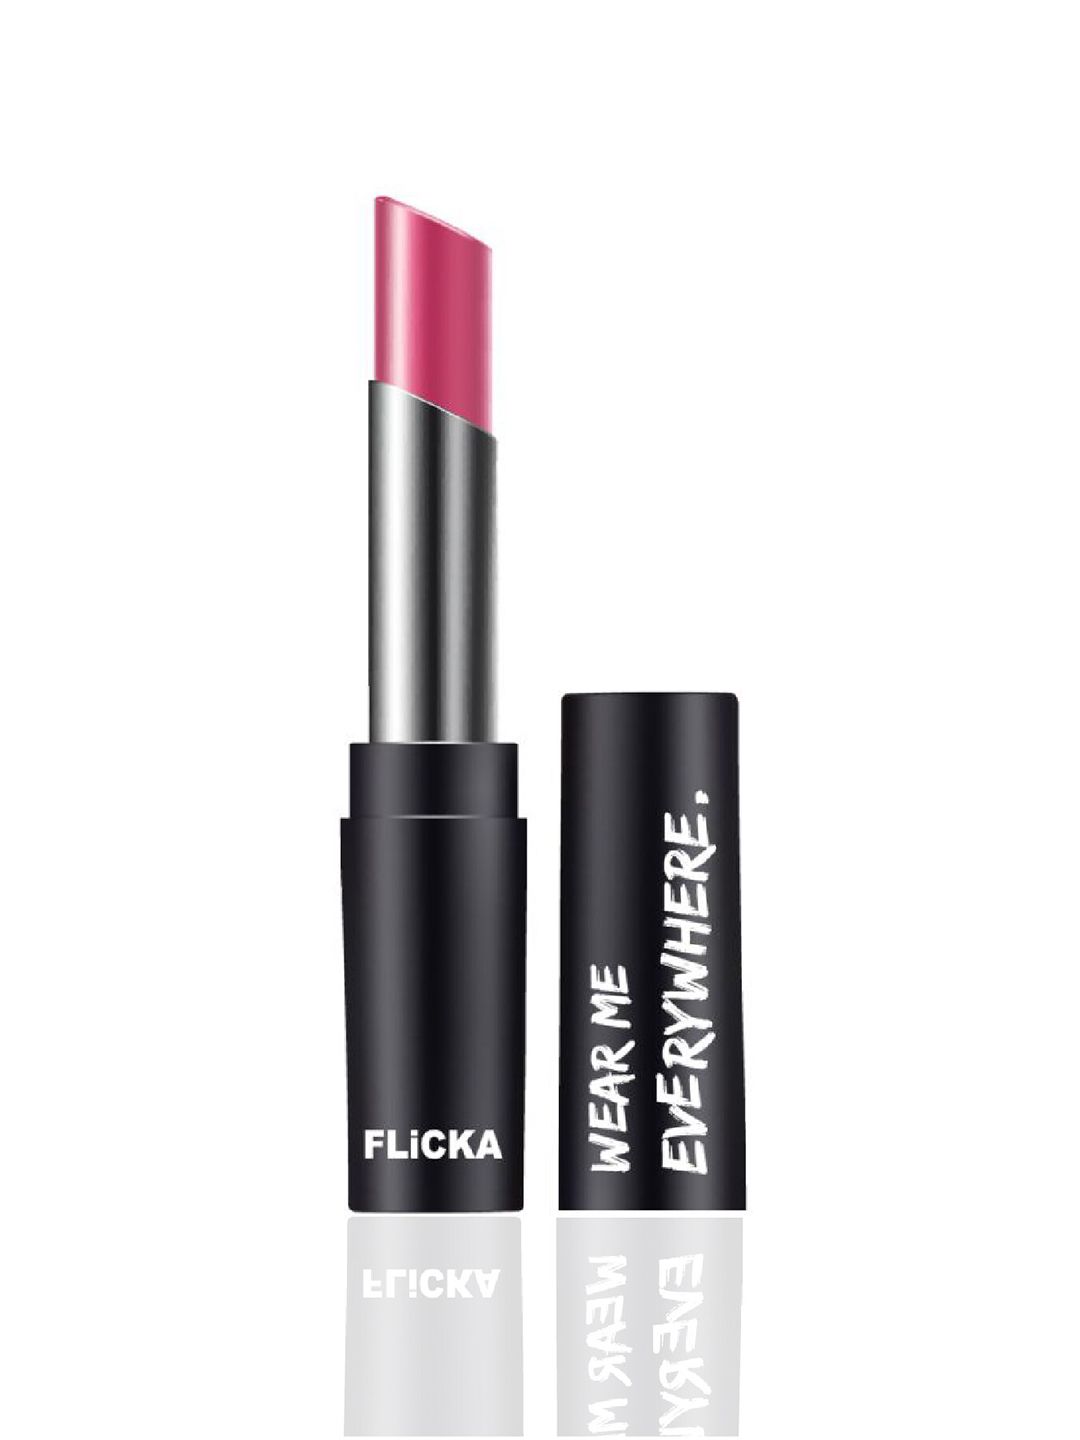 FLiCKA Wear Me Everywhere Creamy Matte Lipstick -  Pink Lemonade 11 Price in India